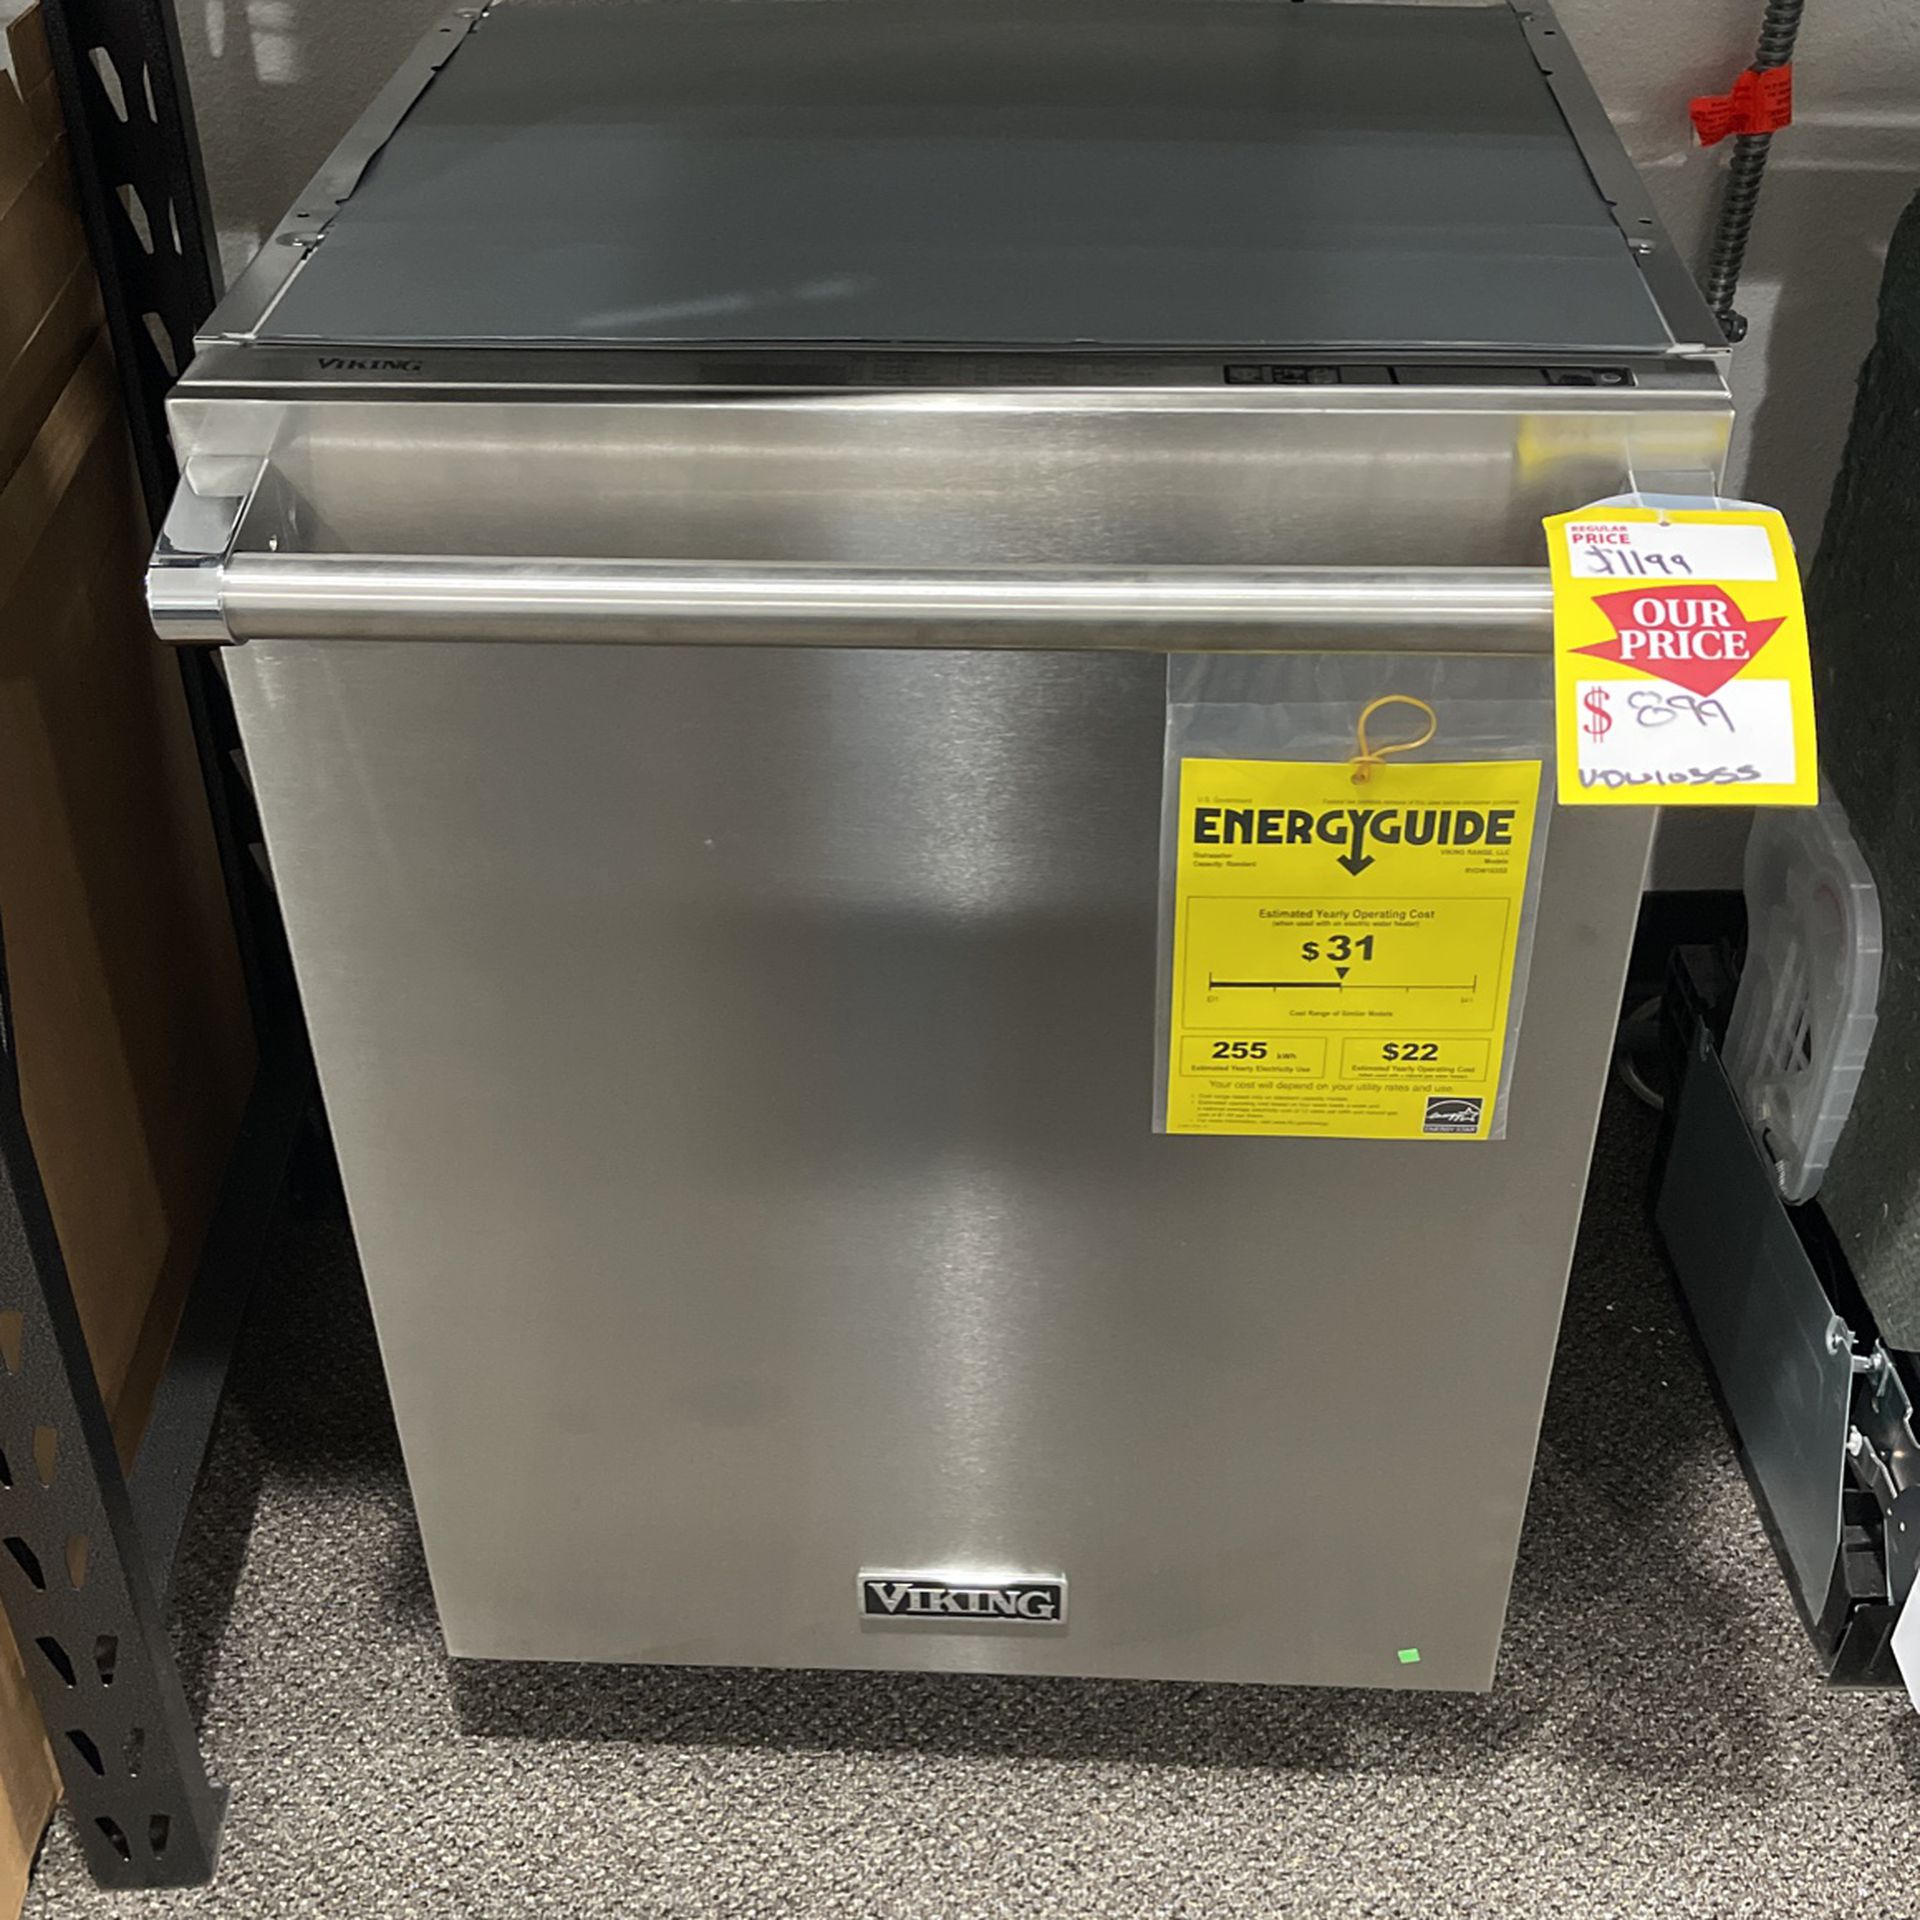 Brand New Viking Dishwasher 